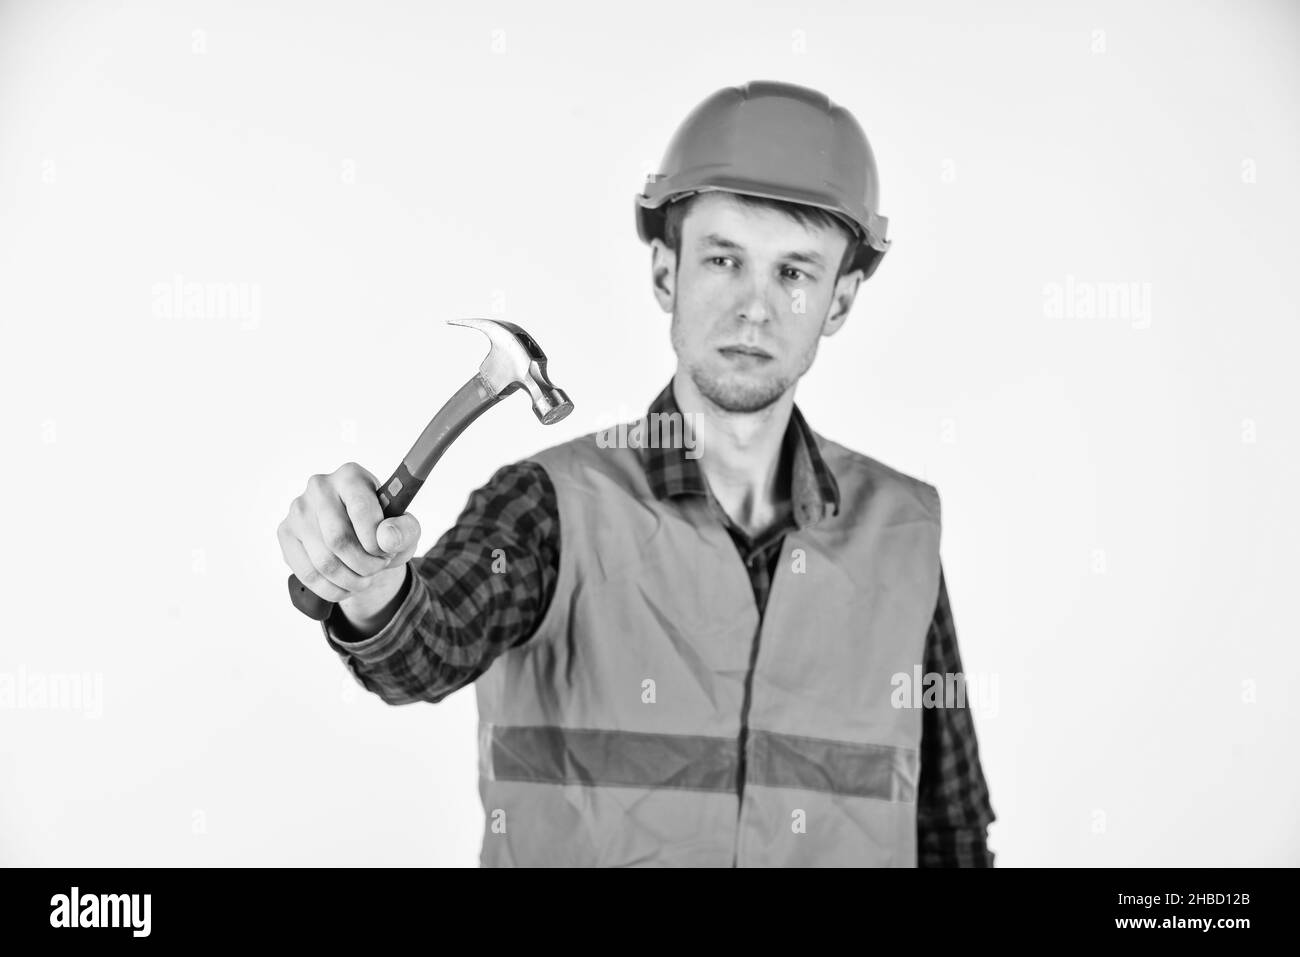 Guy knoking shiny metal hammer master repair wear helmet uniform, professional tools concept Stock Photo